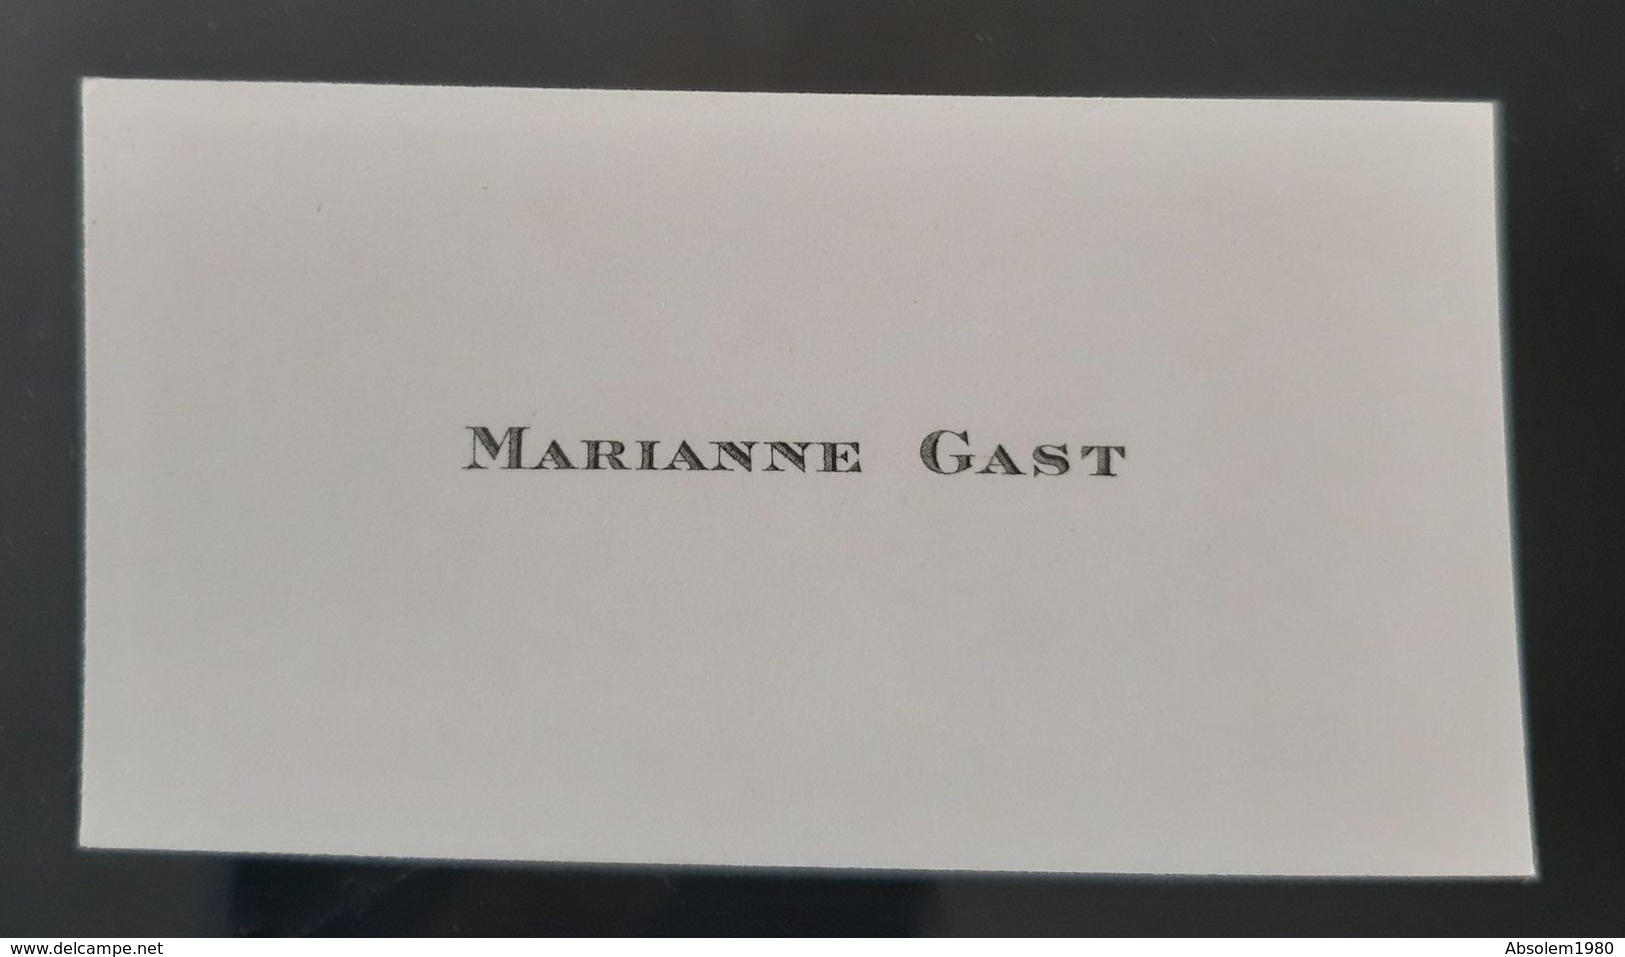 MARIANNE GAST PHOTOGRAPHE ALLEMANDE DEUTSCHER FOTOGRAF GERMAN PHOTOGRAPHER CARTE VISITE ANCIENNE PHOTOGRAPHIE PHOTO - Visiting Cards